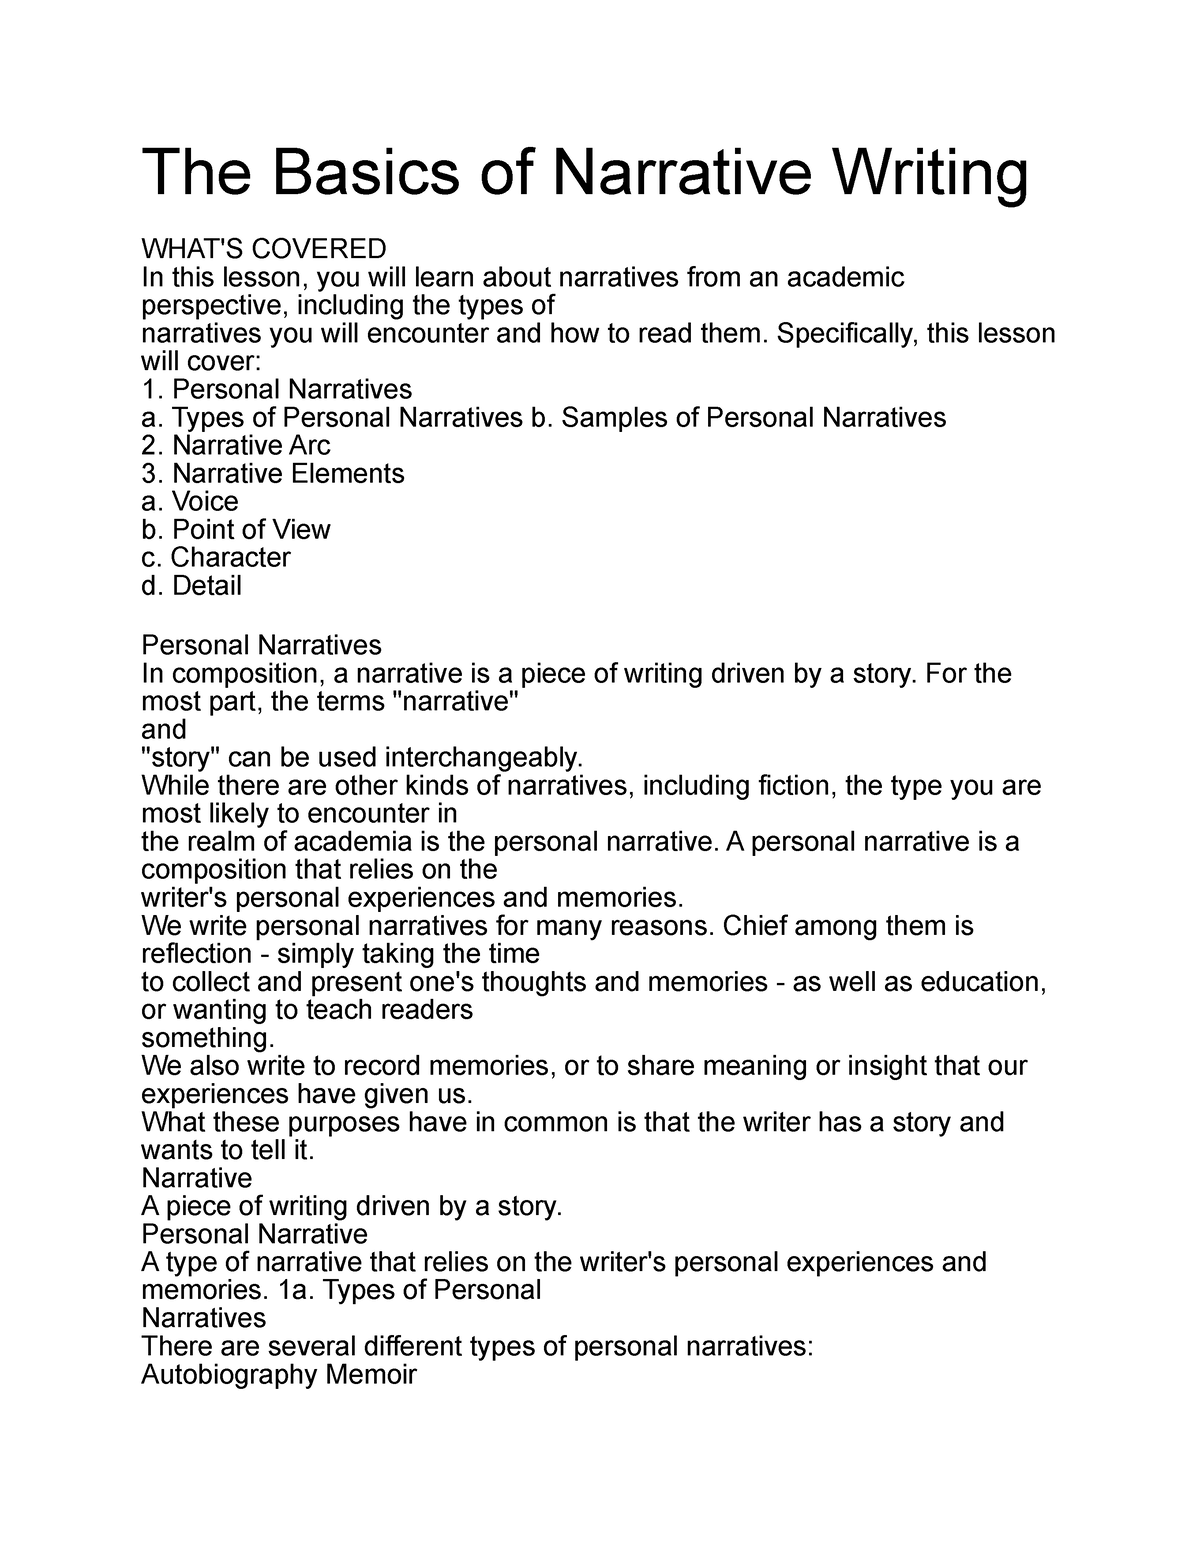 The Basics of Narrative Writing - The Basics of Narrative Writing WHAT ...